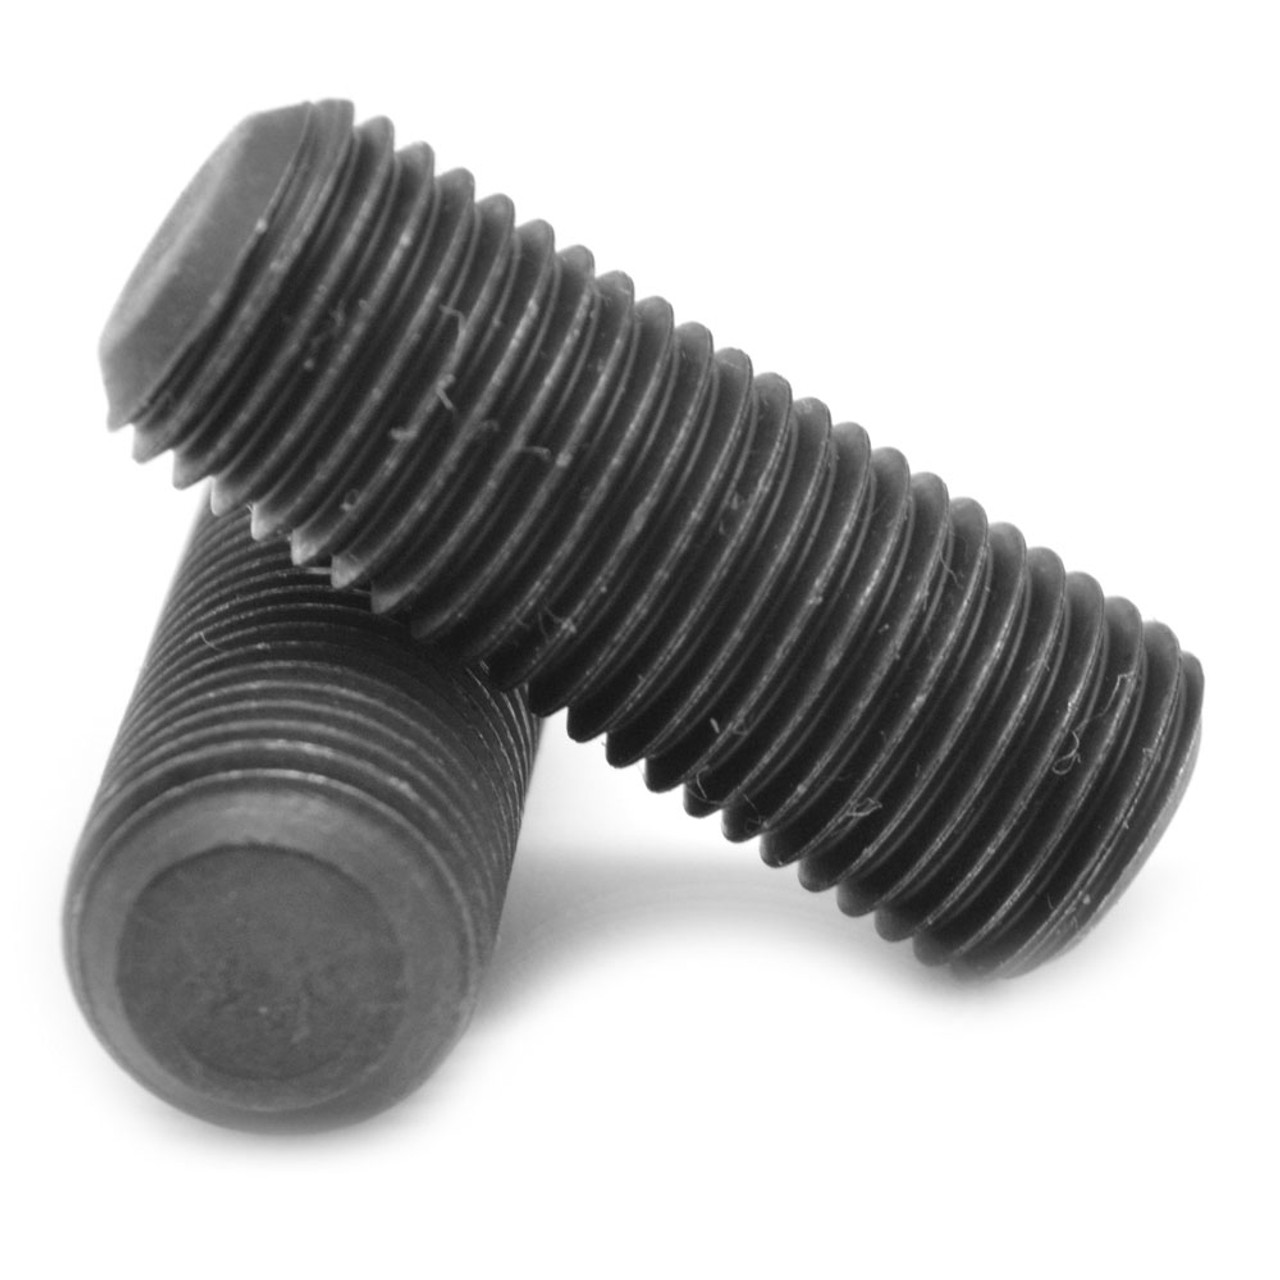 1/2"-13 x 1" Coarse Thread Socket Set Screw Flat Point Alloy Steel Black Oxide